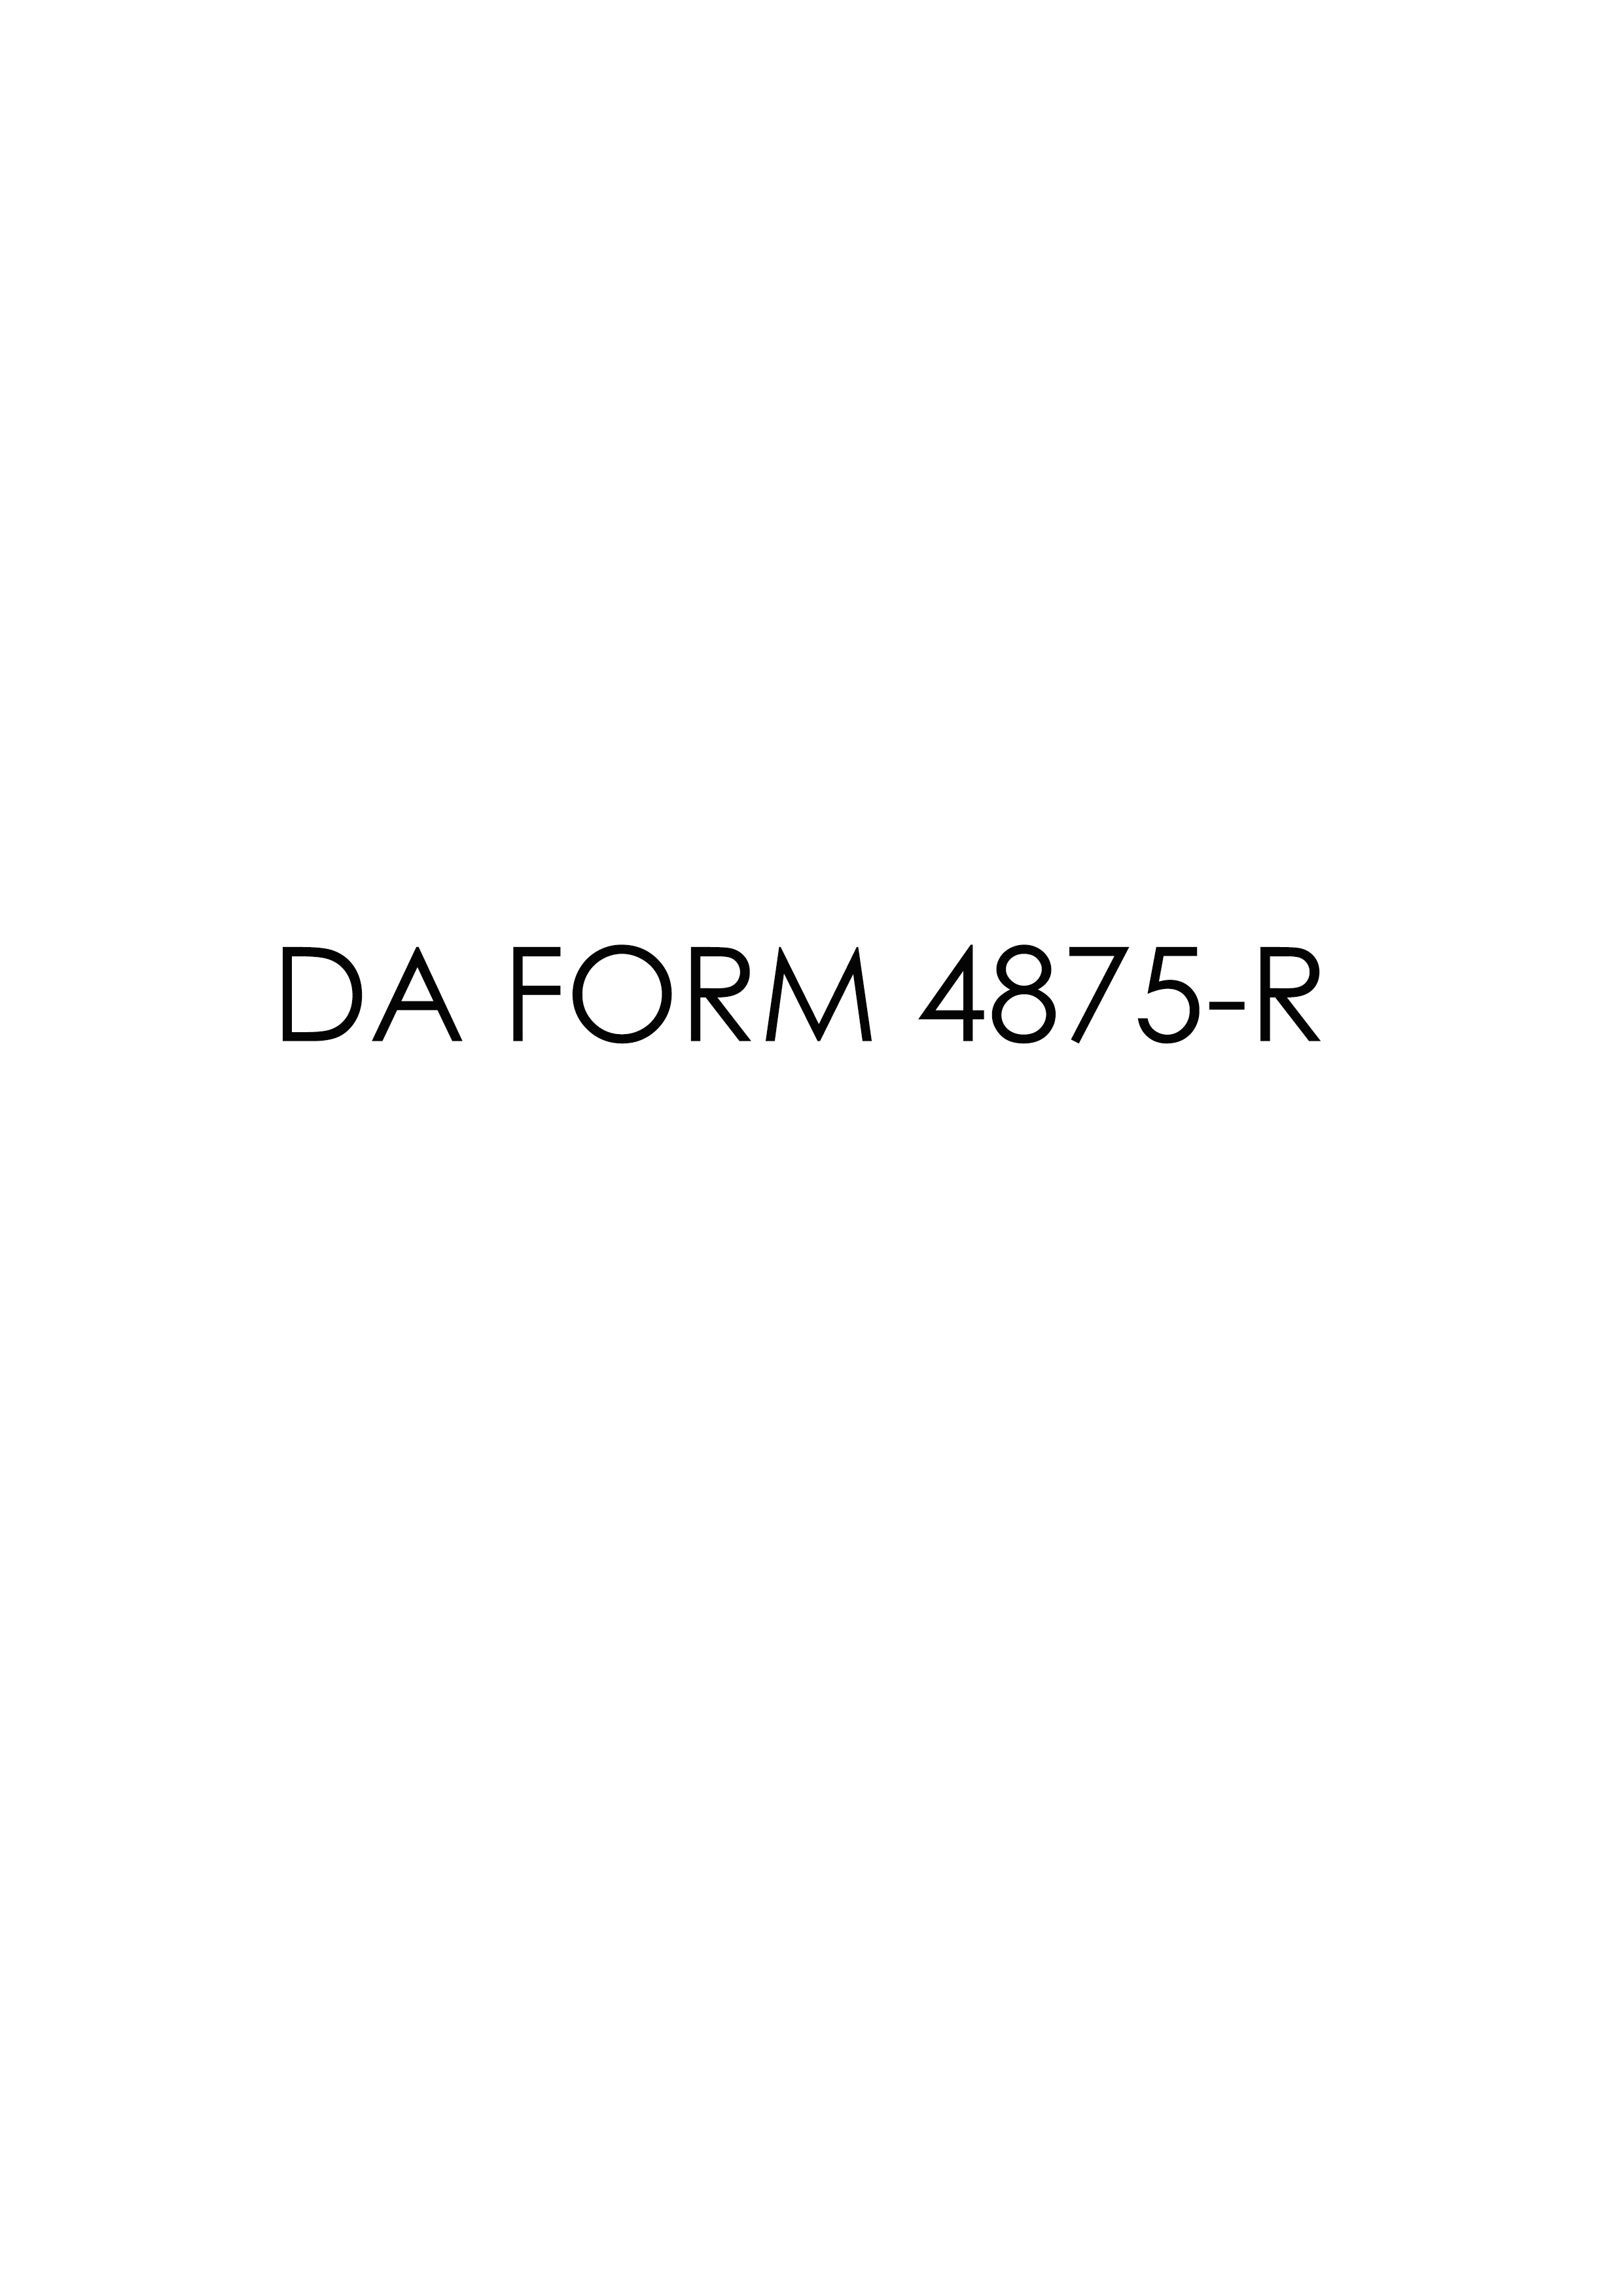 da Form 4875-R fillable